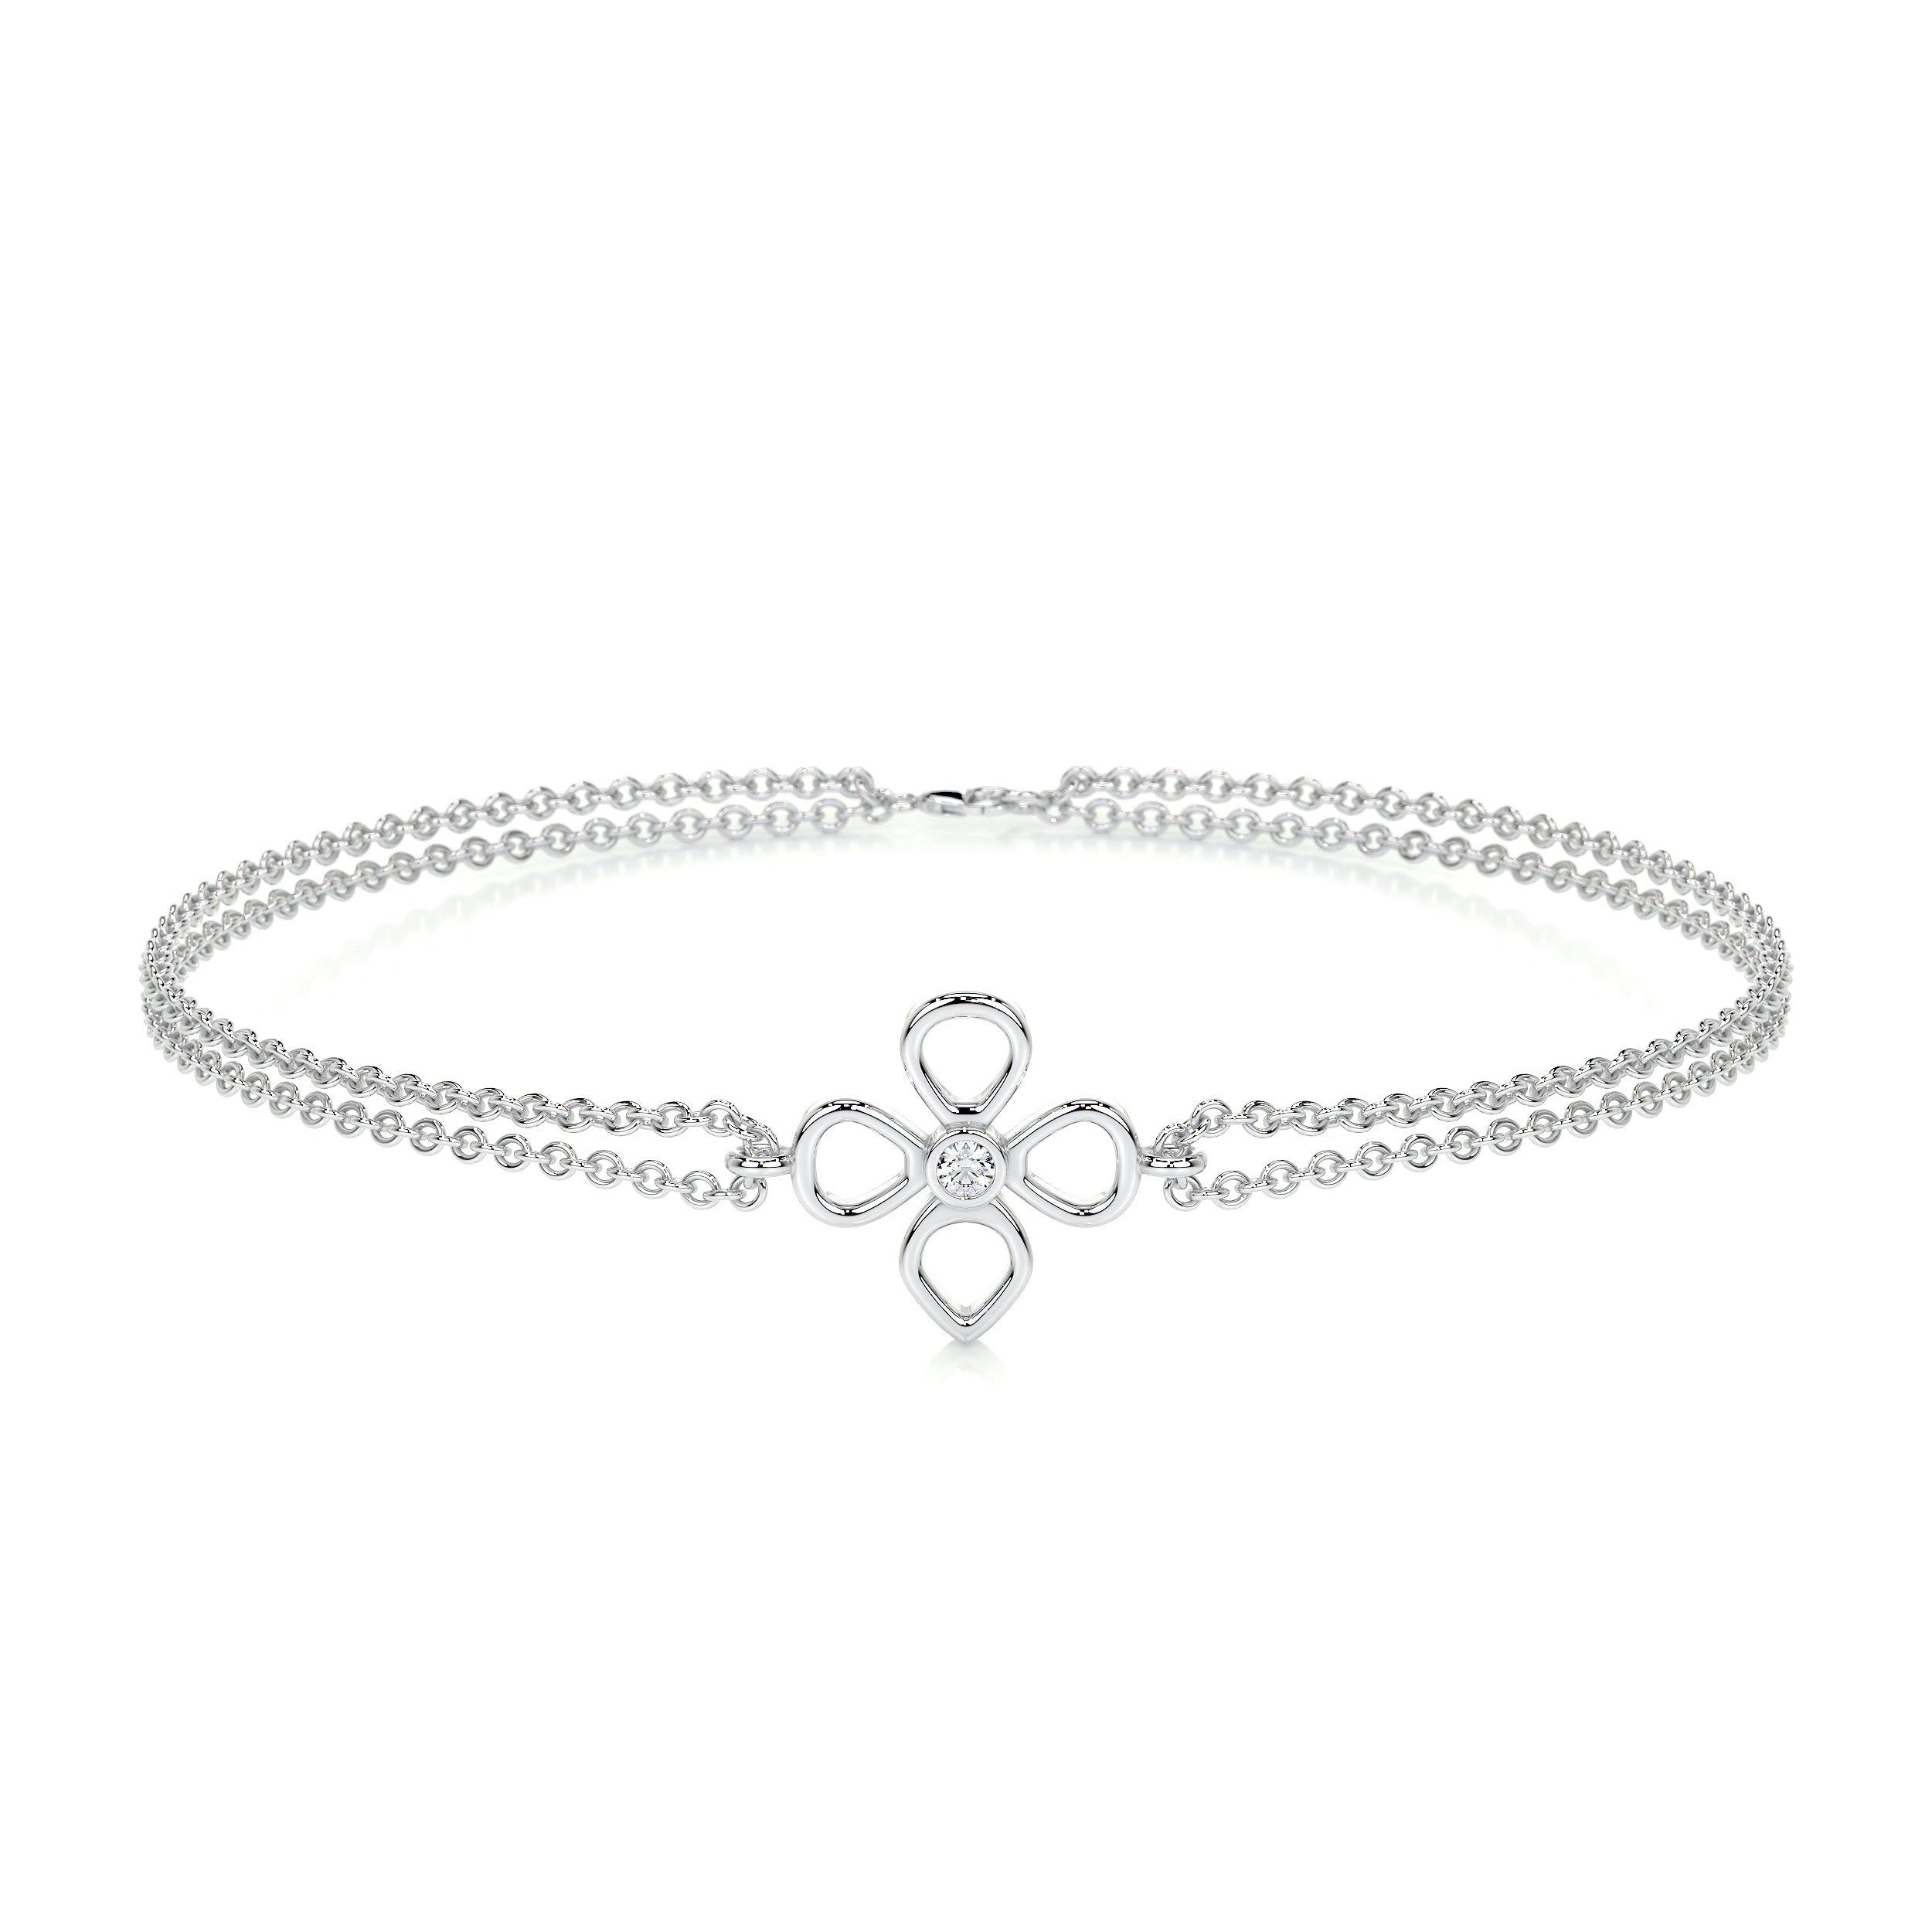 Dolores Diamonds Bracelet   (0.02 Carat) -14K White Gold